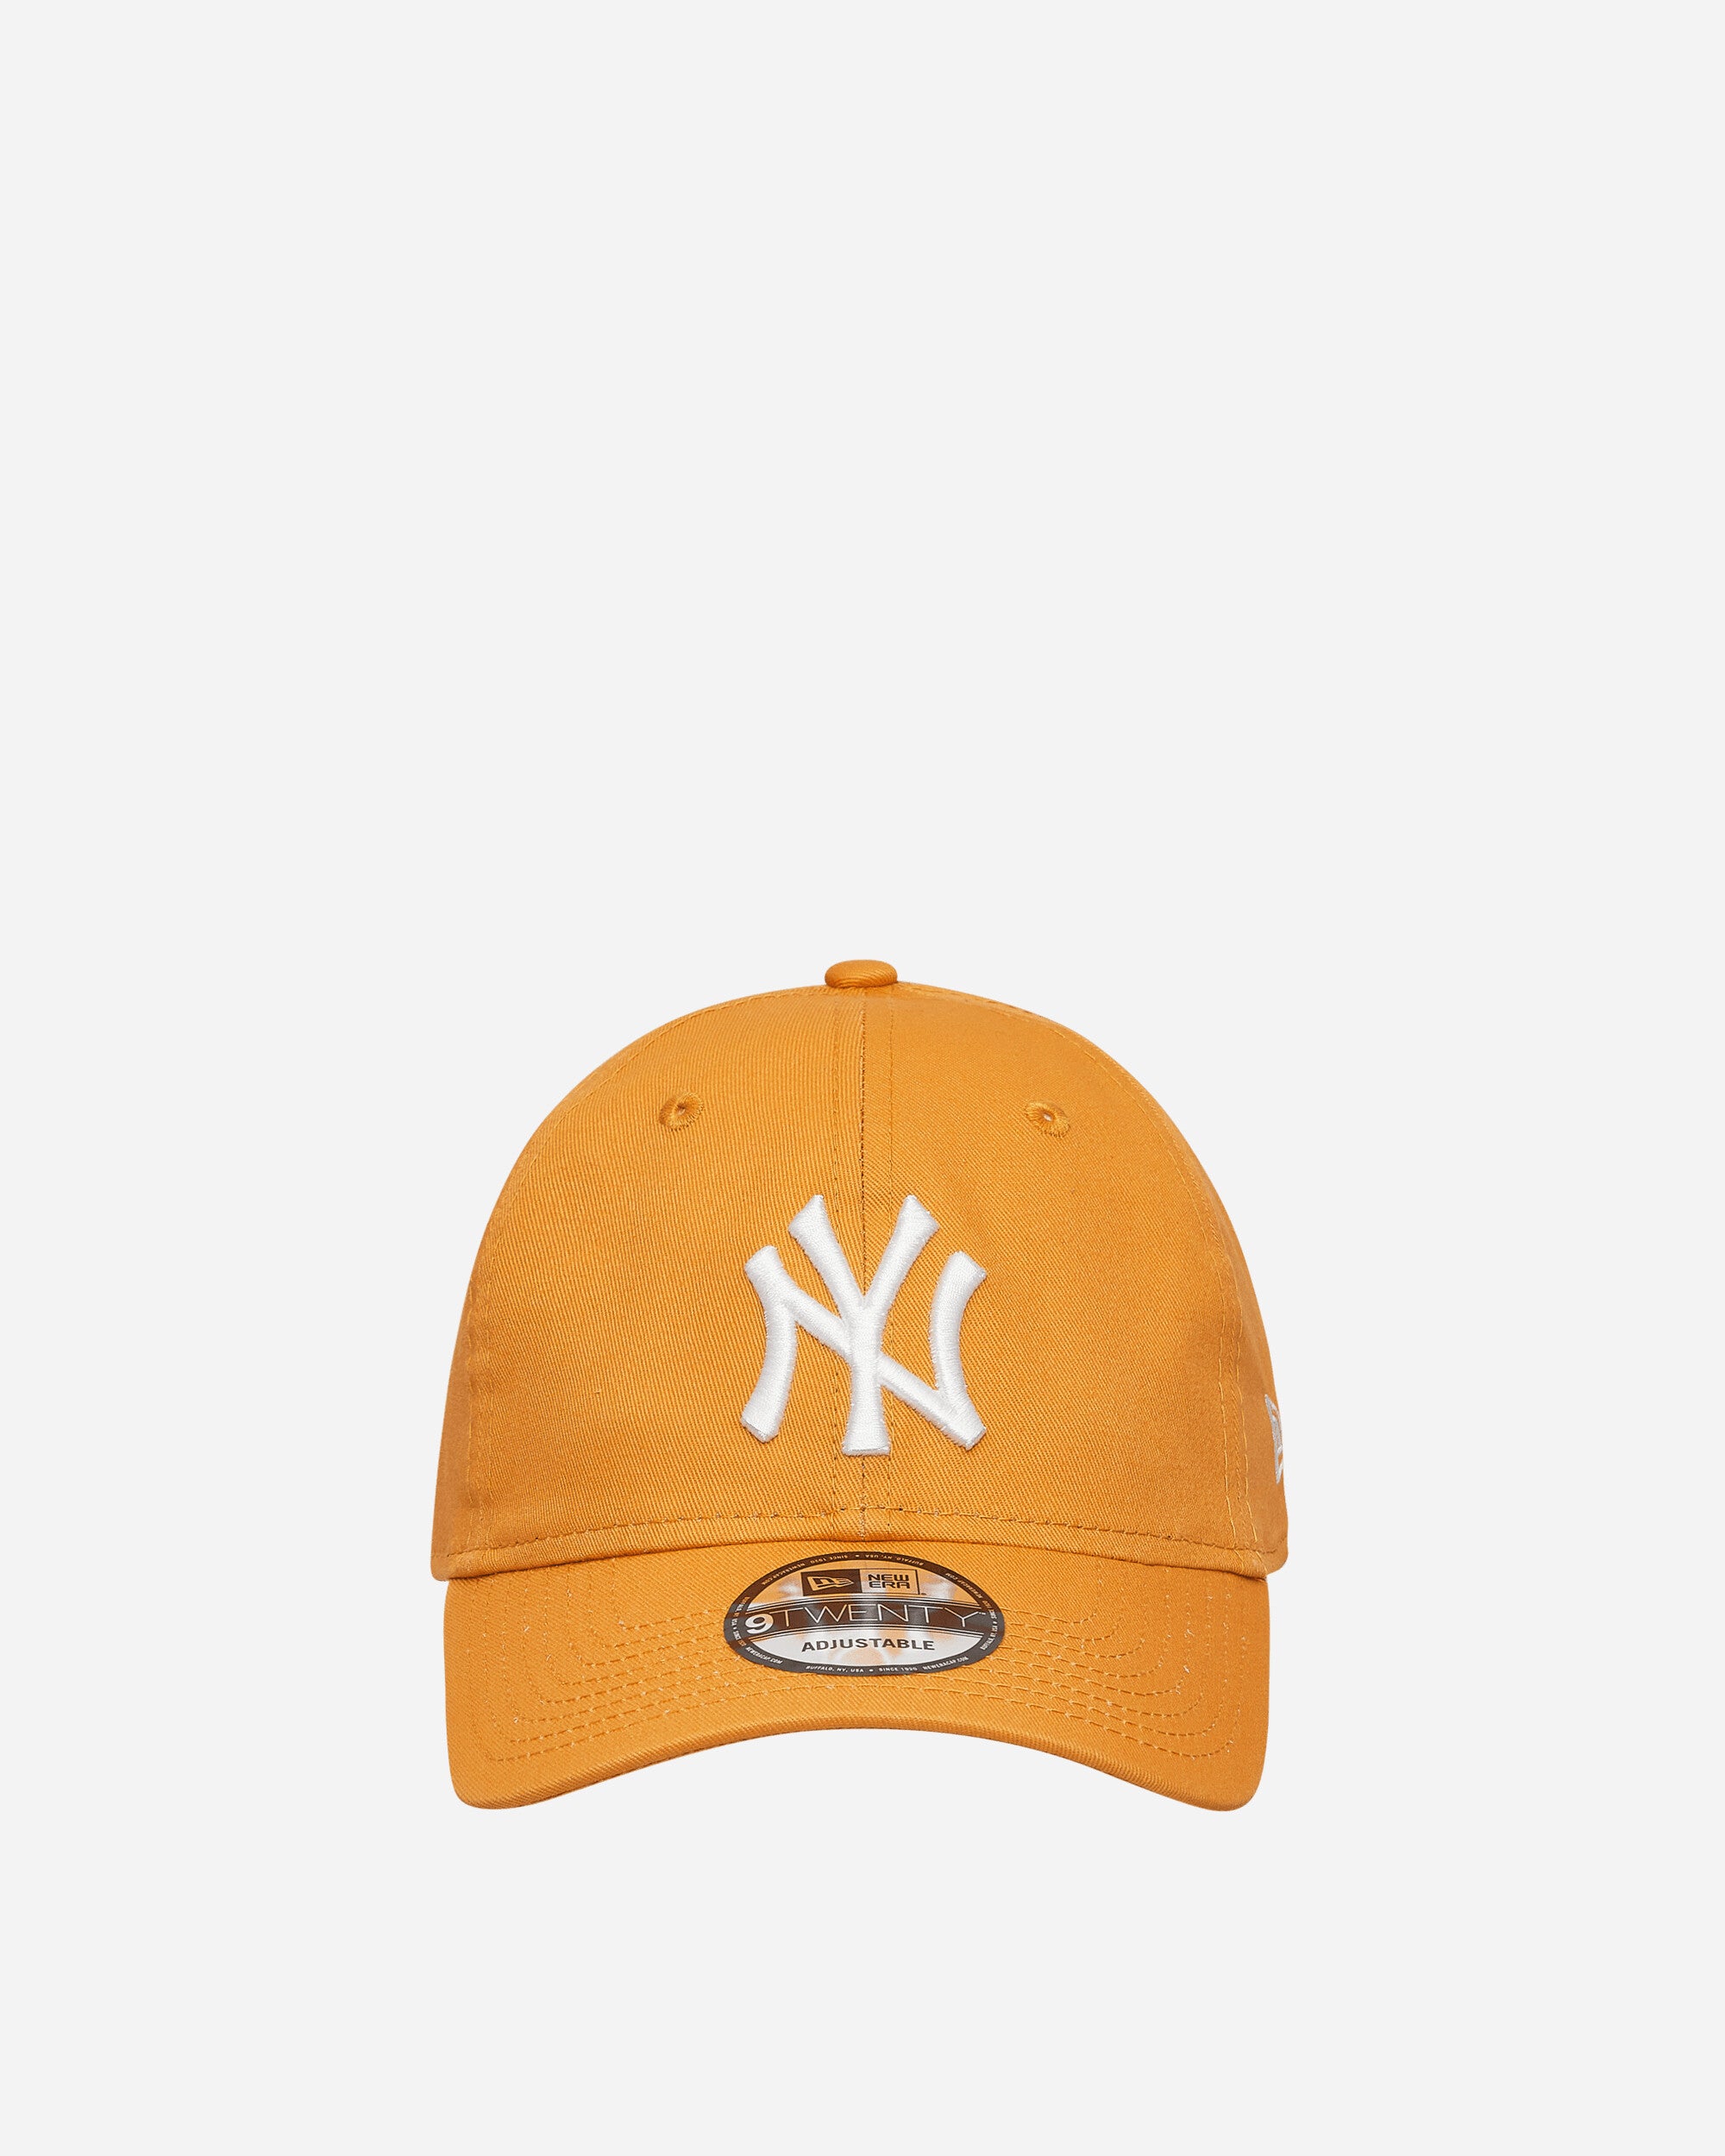 blad Mijlpaal Republikeinse partij New Era New York Yankees 9FIFTY Cap Orange - Slam Jam Official Store